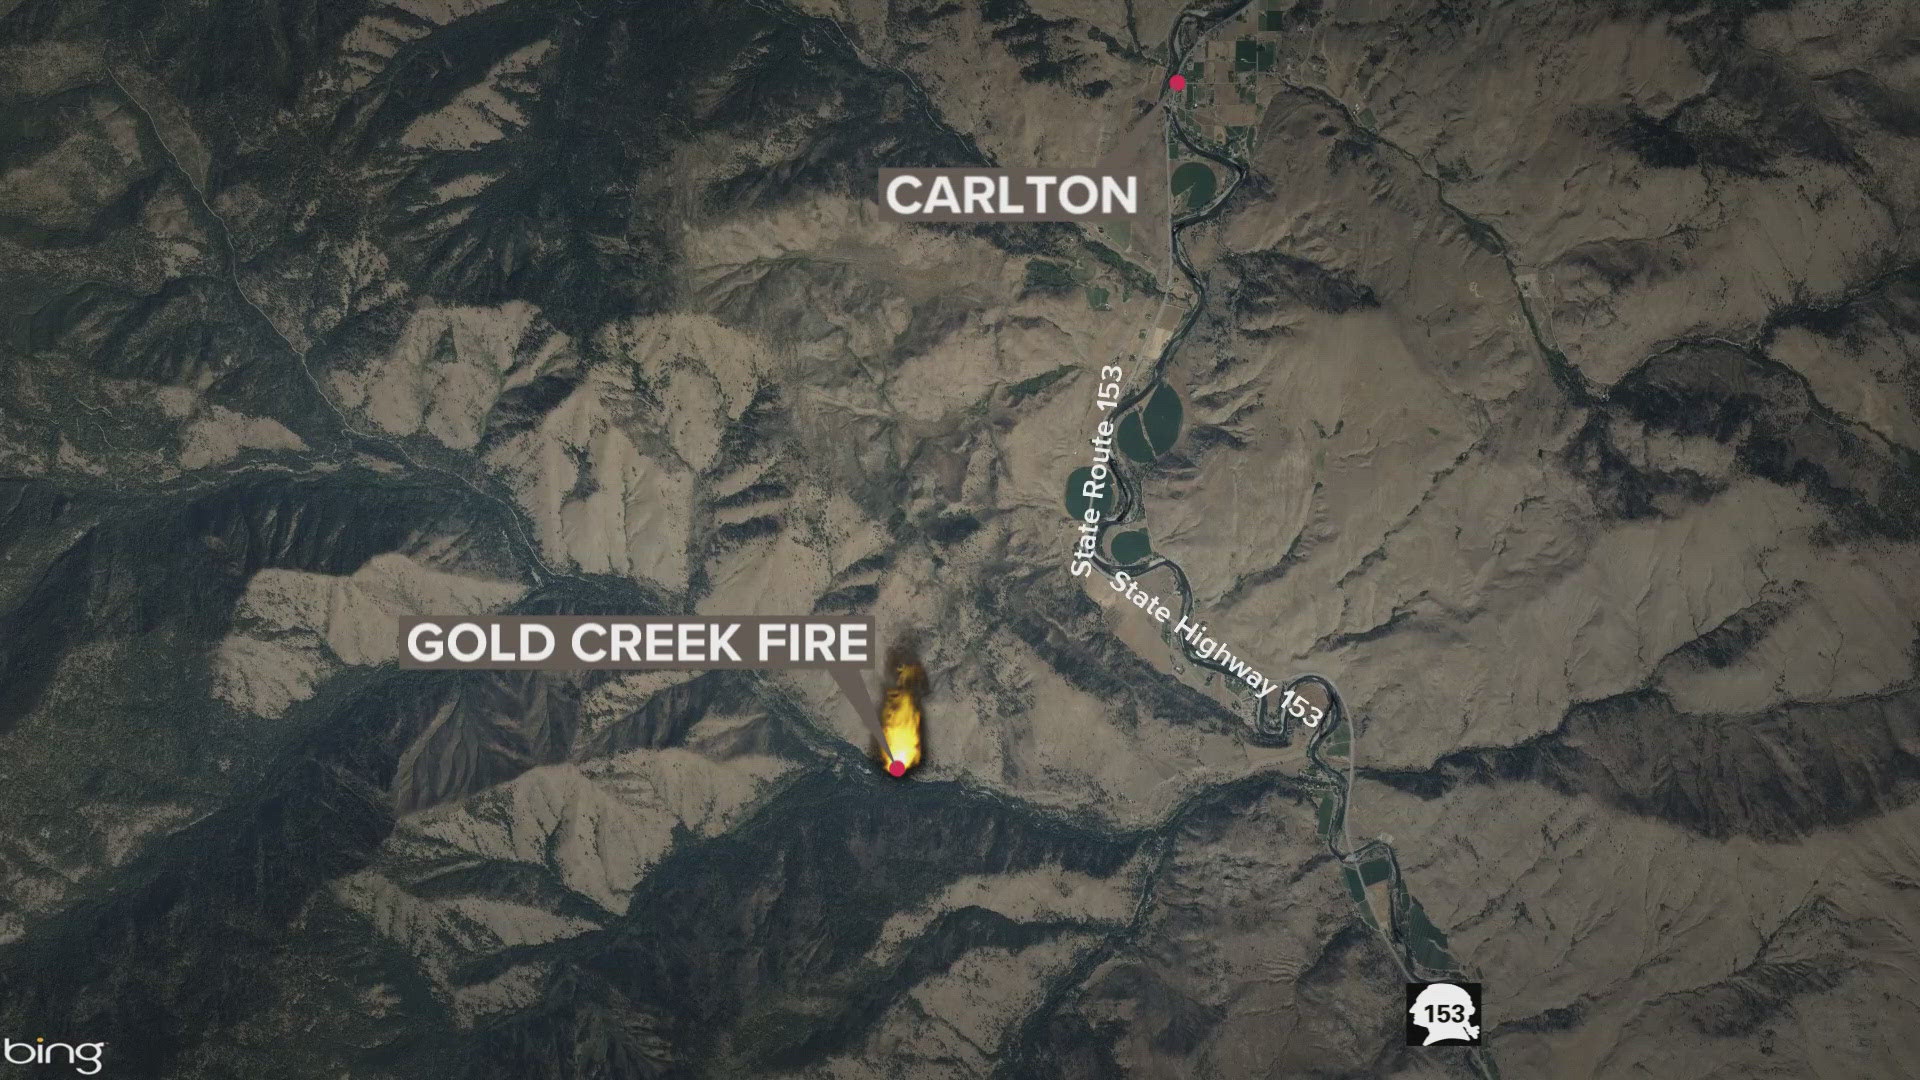 According to Okanogan County Emergency Management, the fire is burning near Carlton, Washington.